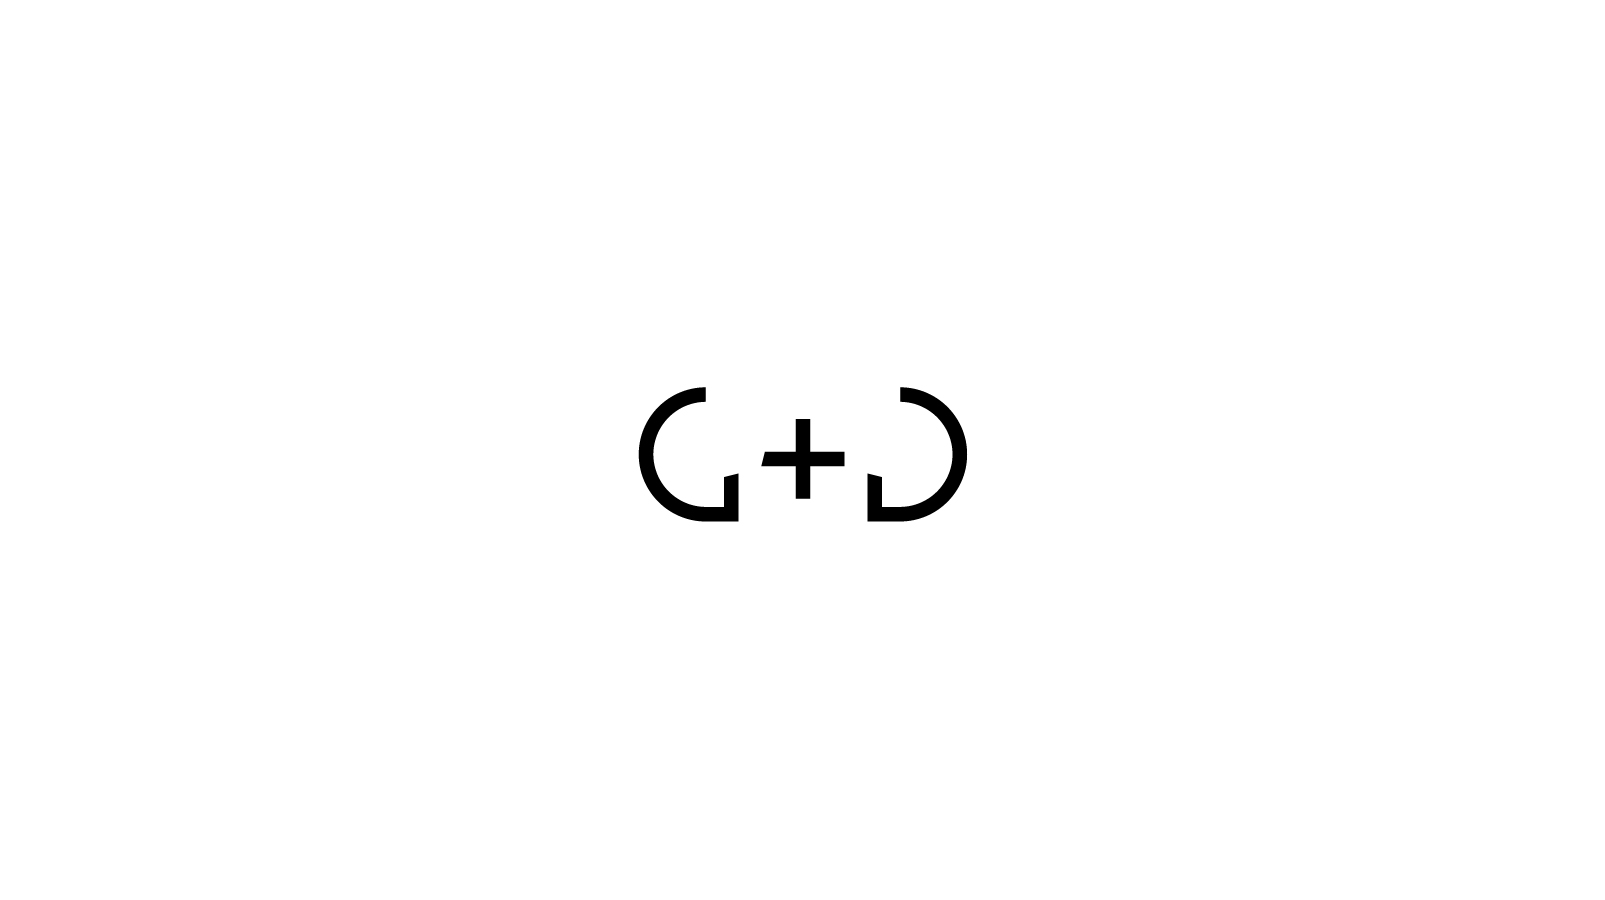 Symboles G+D fond blanc